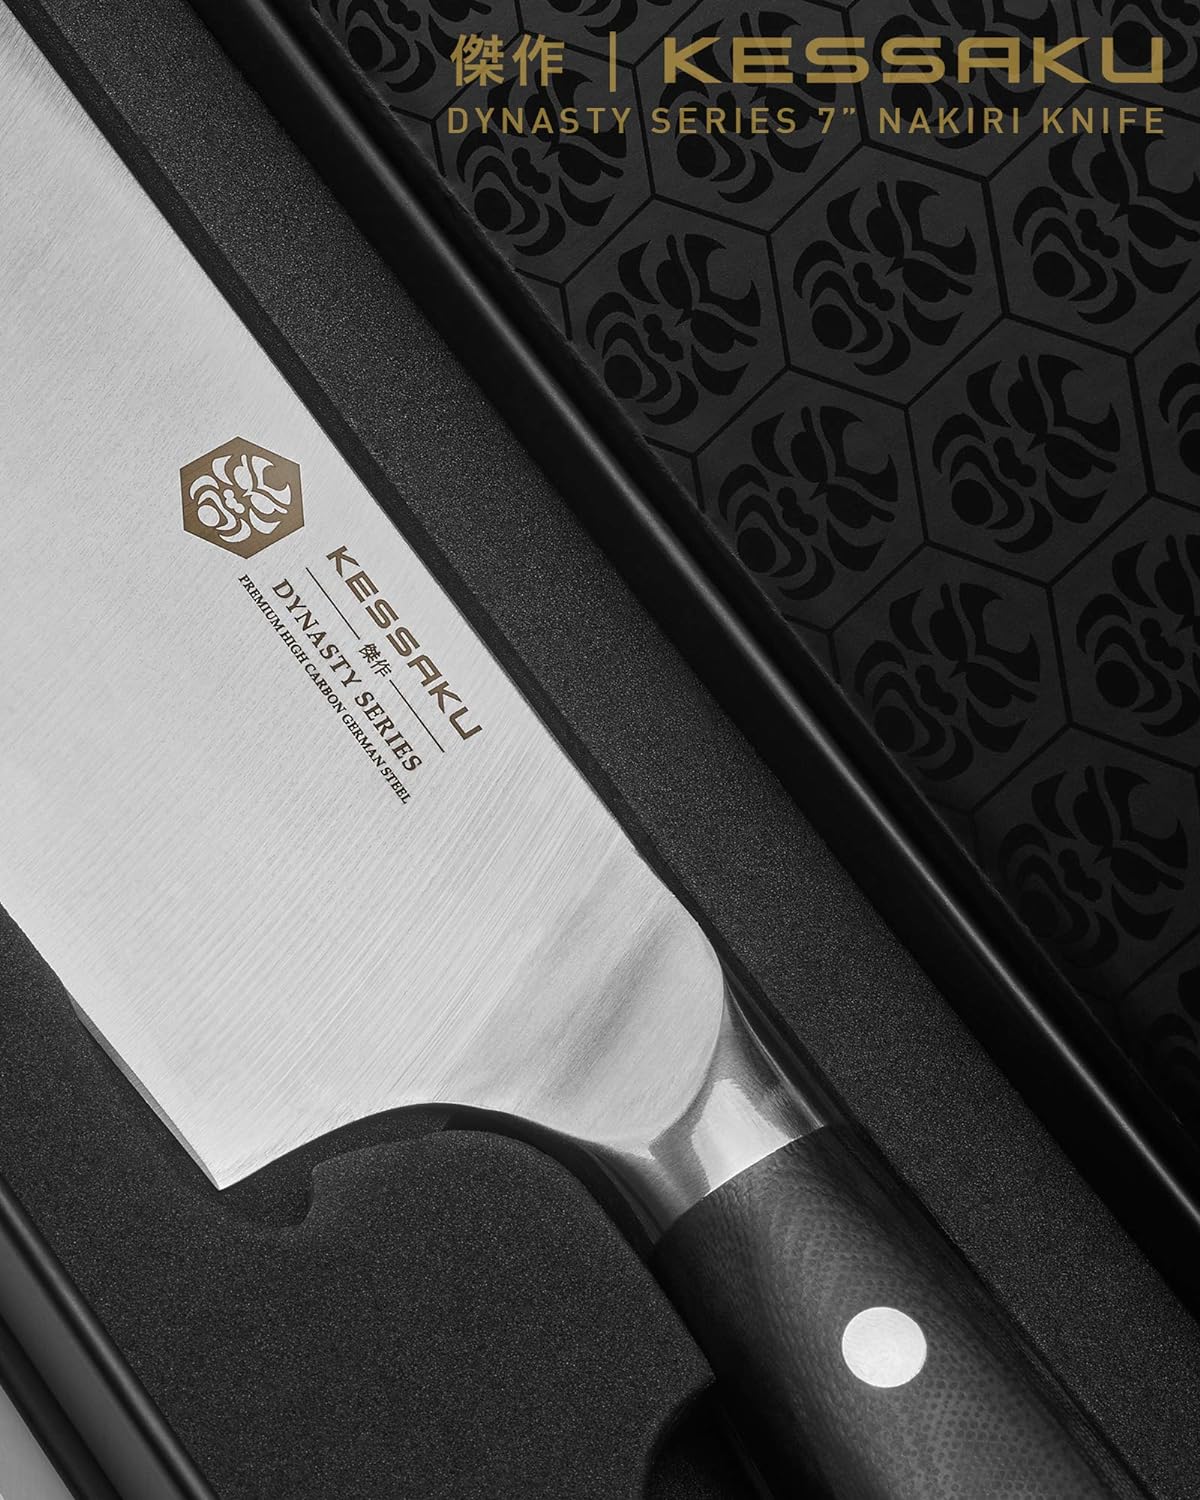 KESSAKU Utility Knife - 5 inch - Dynasty Series - Razor Sharp Kitchen Knife - Forged ThyssenKrupp German High Carbon Stainless Steel - G10 Garolite Handle with Blade Guard